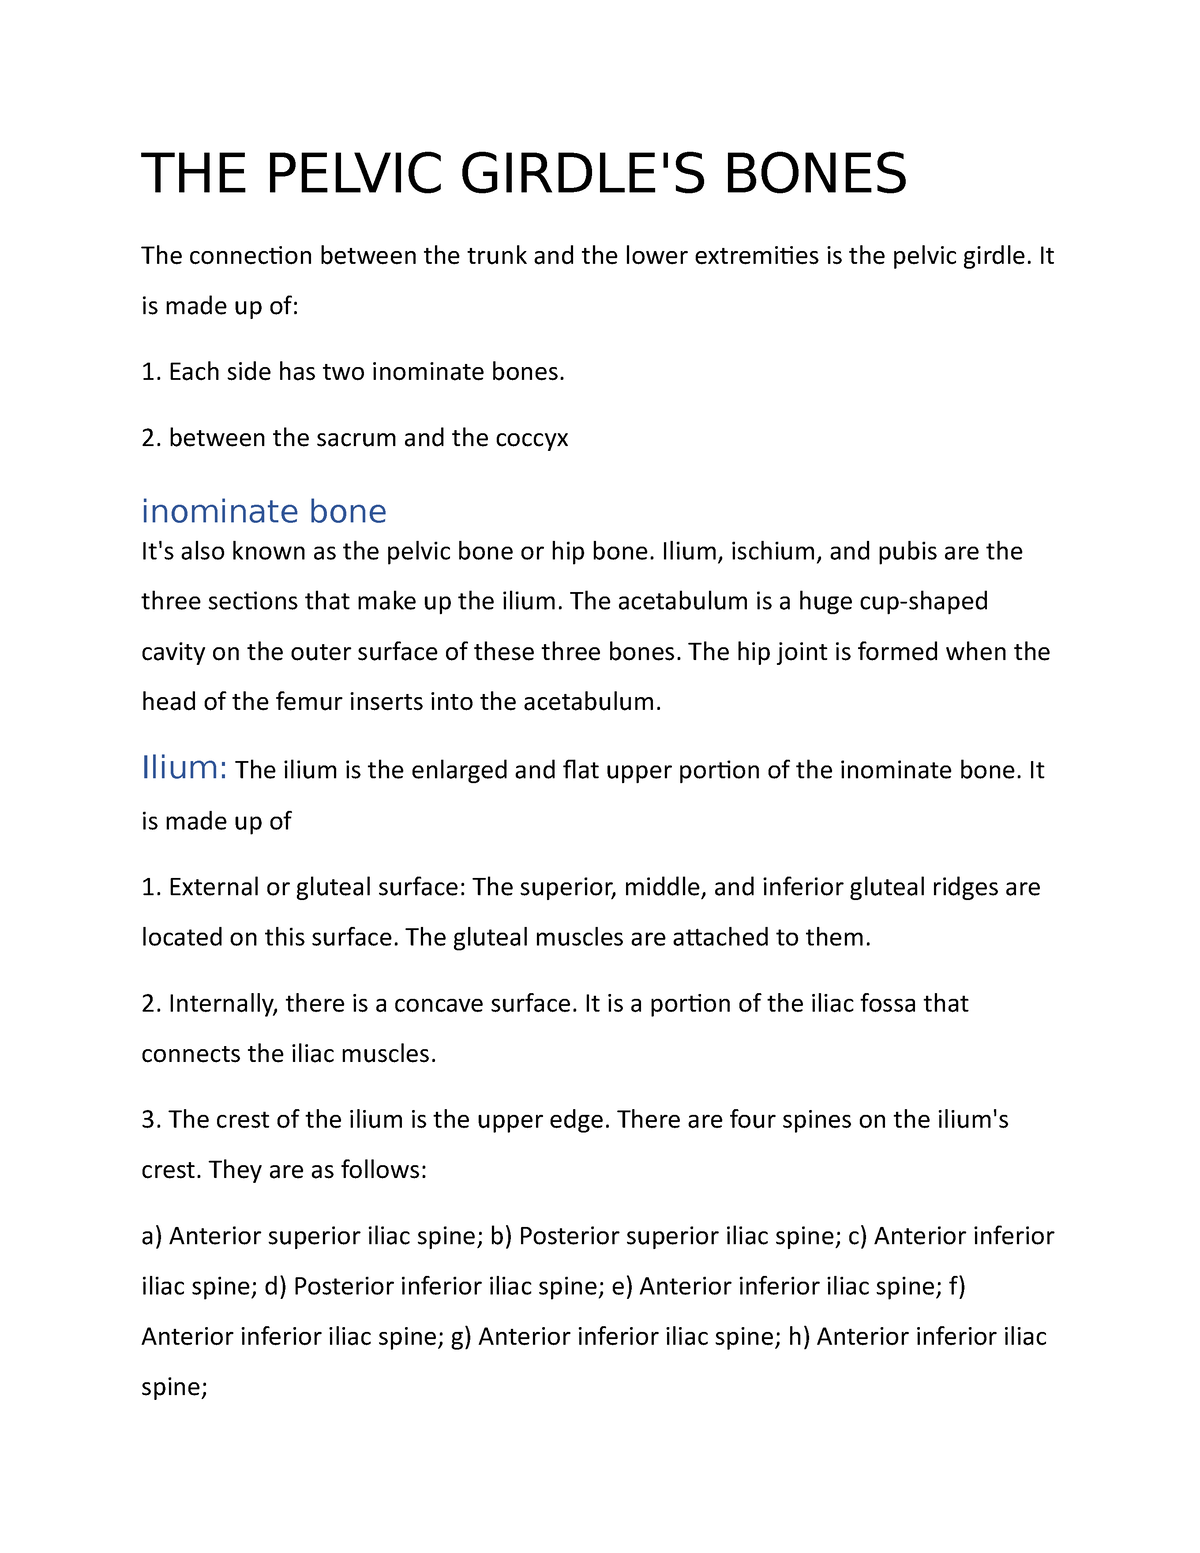 THE Pelvic Girdle BONE OF Human - THE PELVIC GIRDLE'S BONES The ...